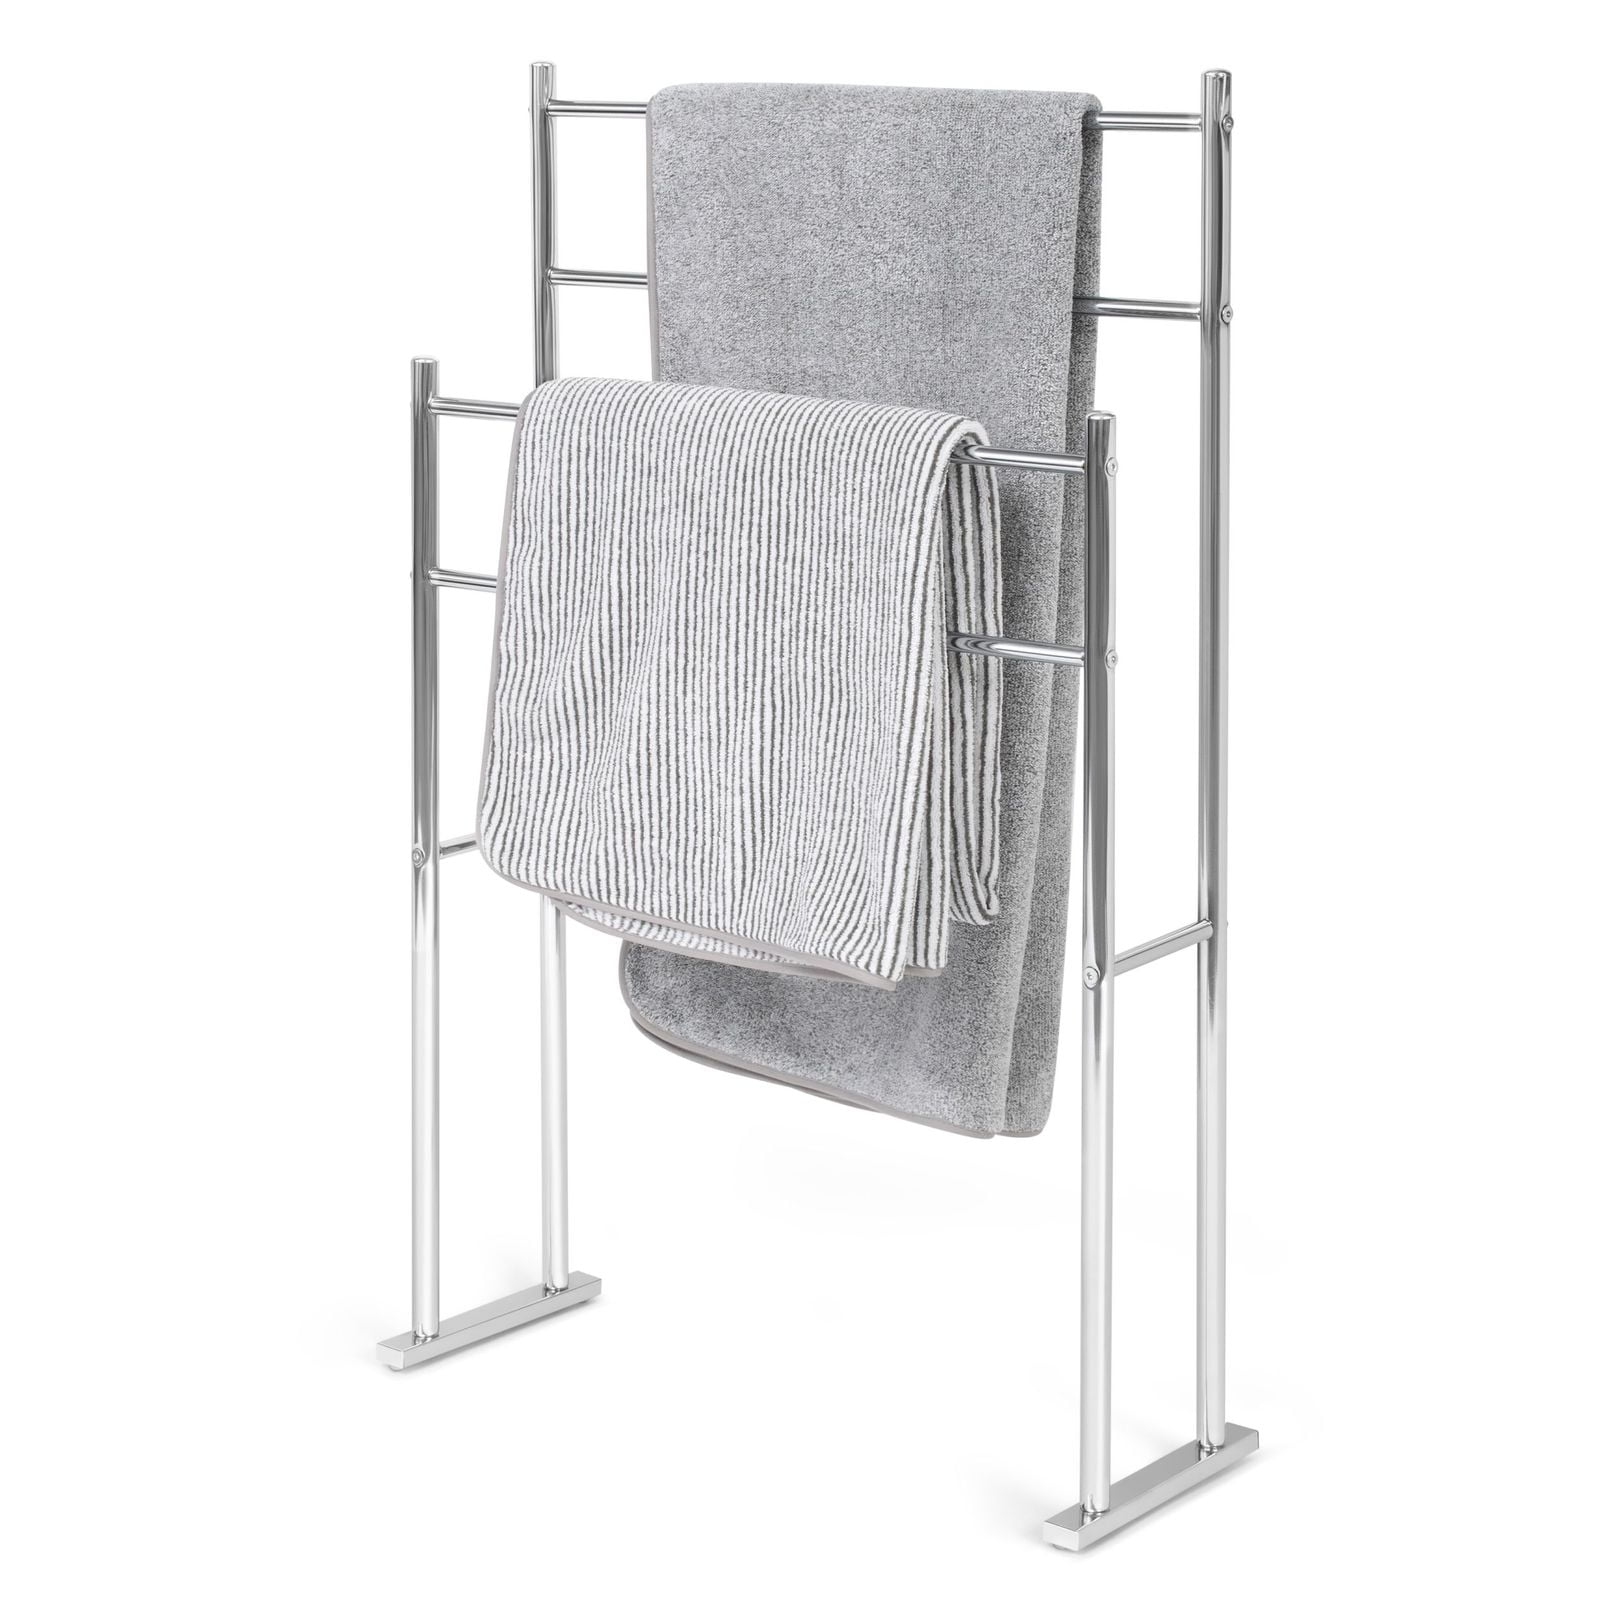 Free Standing Towel Holder Stand Bathroom Rail Bar Contemporary Chrome Storage 